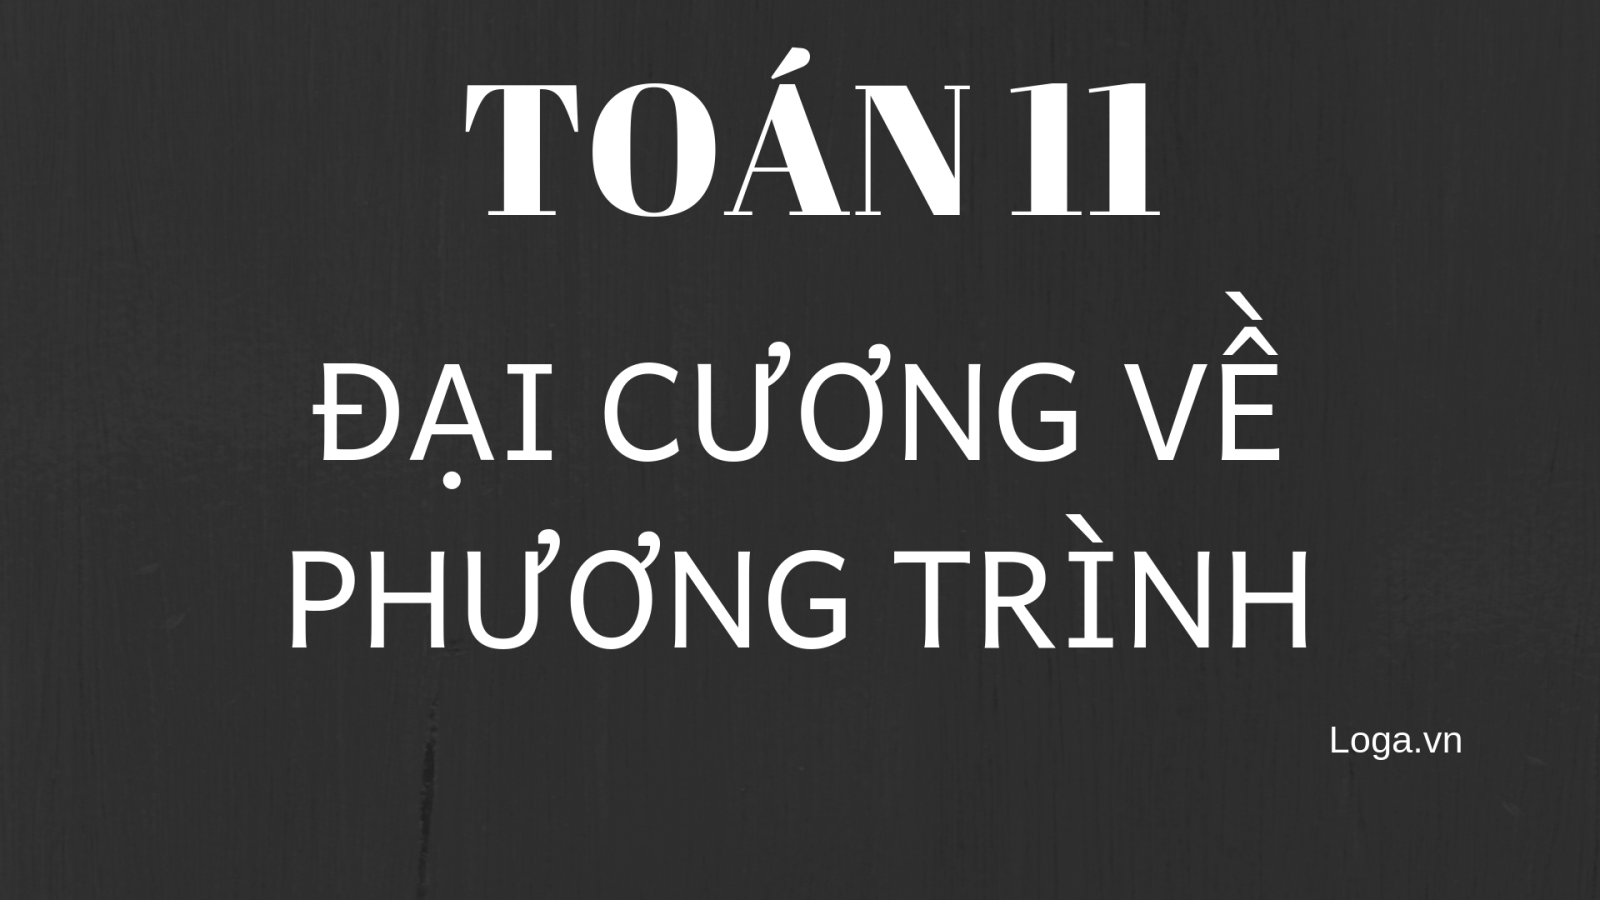 toan-11-dai-cuong-ve-phuong-trinh